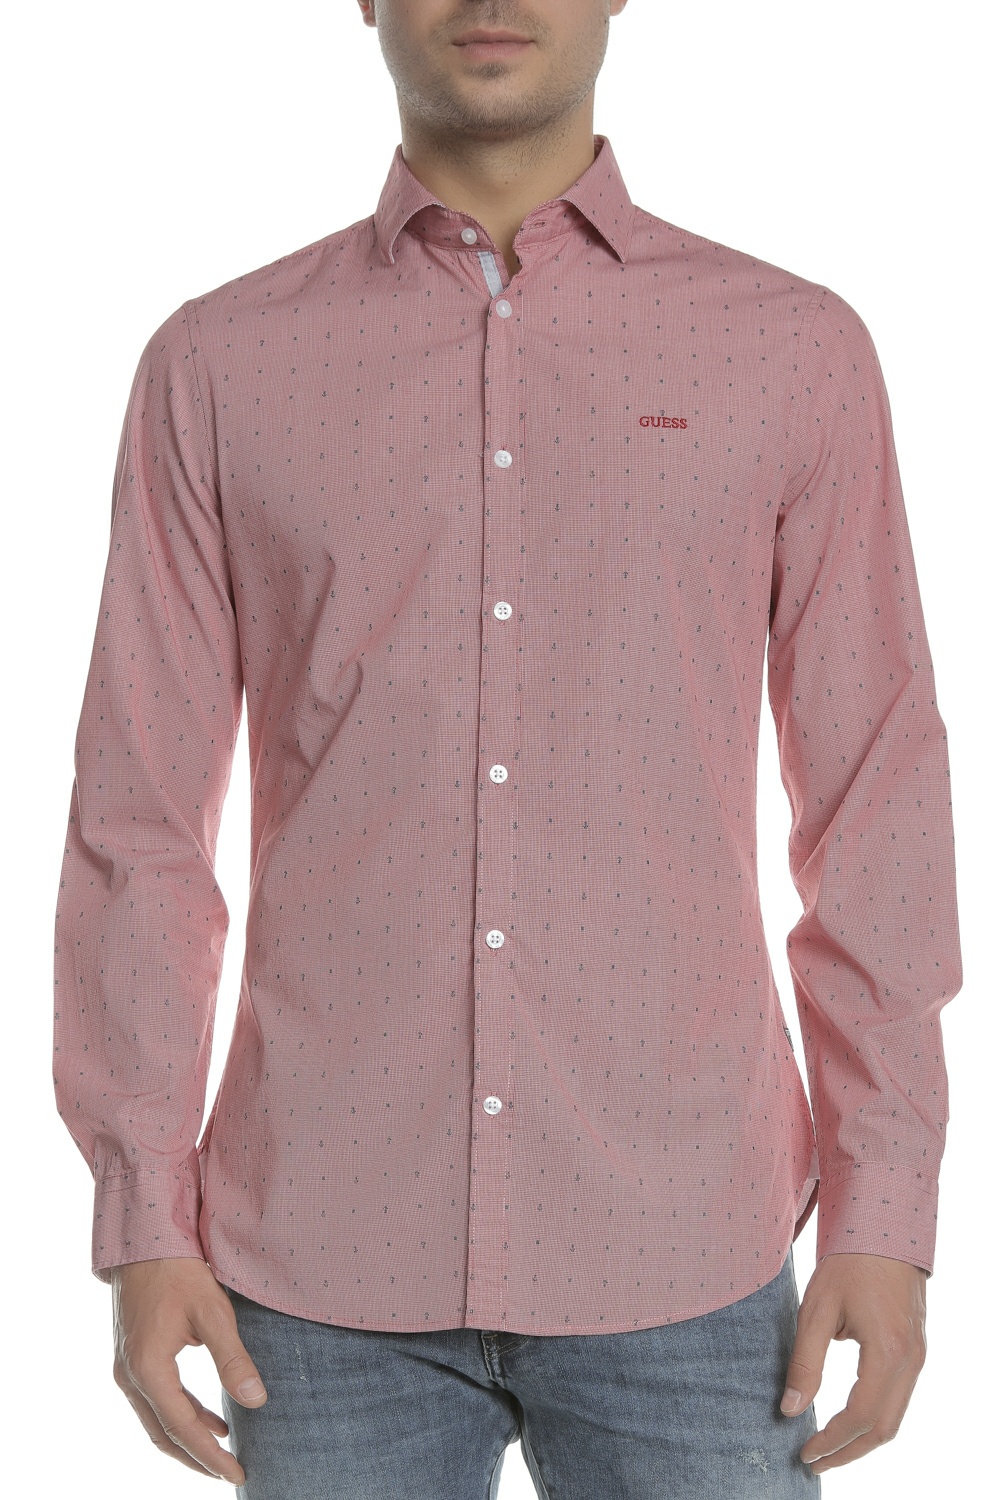 GUESS Ανδρικό μακρυμάνικο πουκάμισο GUESS ροζ με print